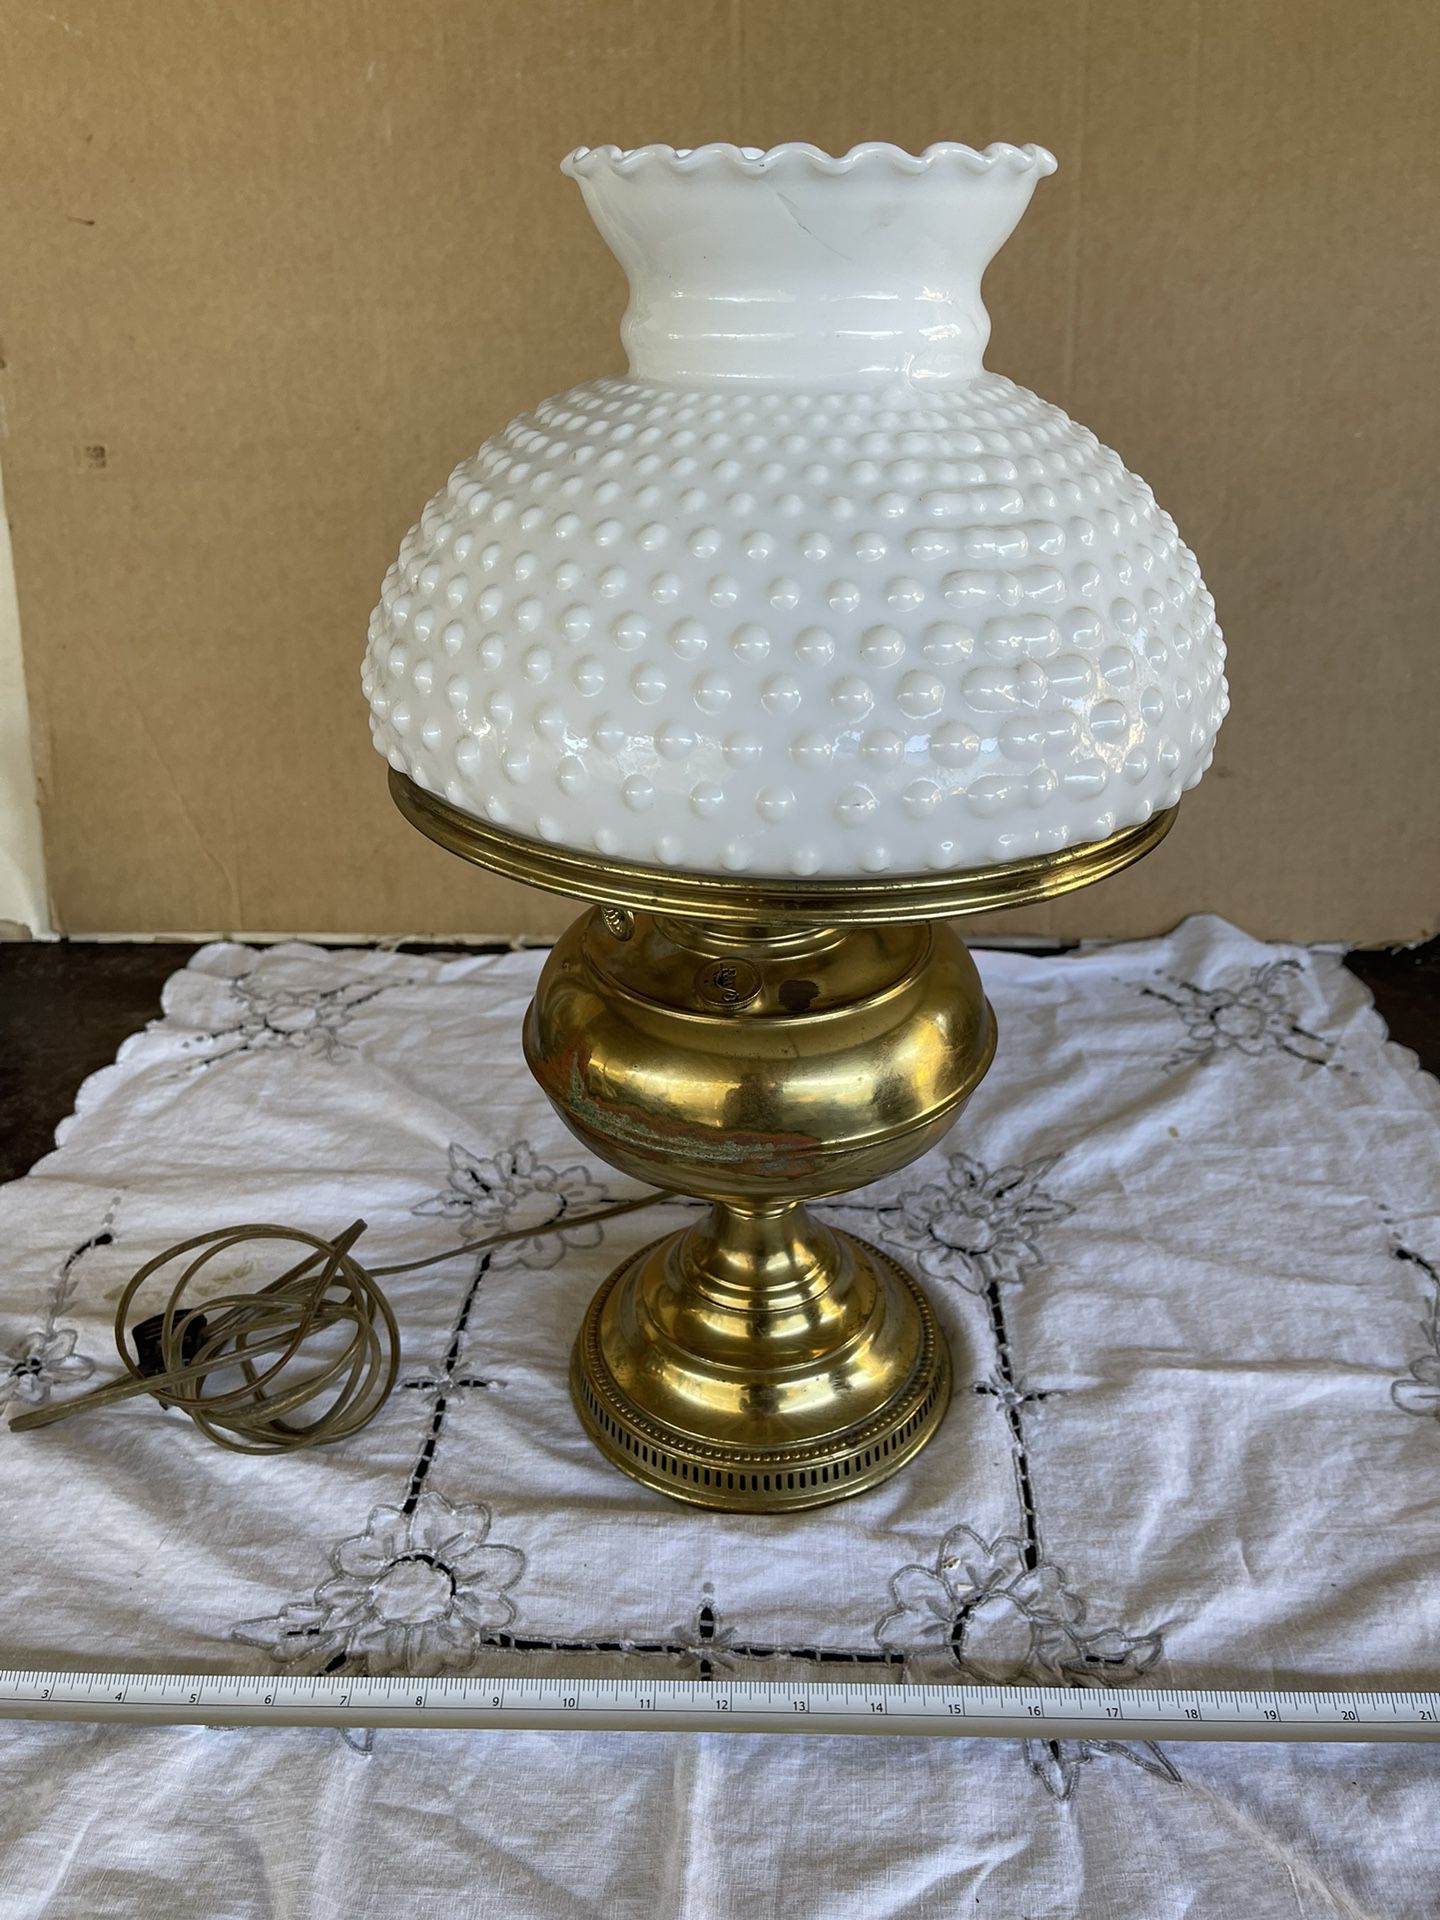 Vintage Hurricane Table Lamp | Milk Glass Shade, Brass-Toned Base 